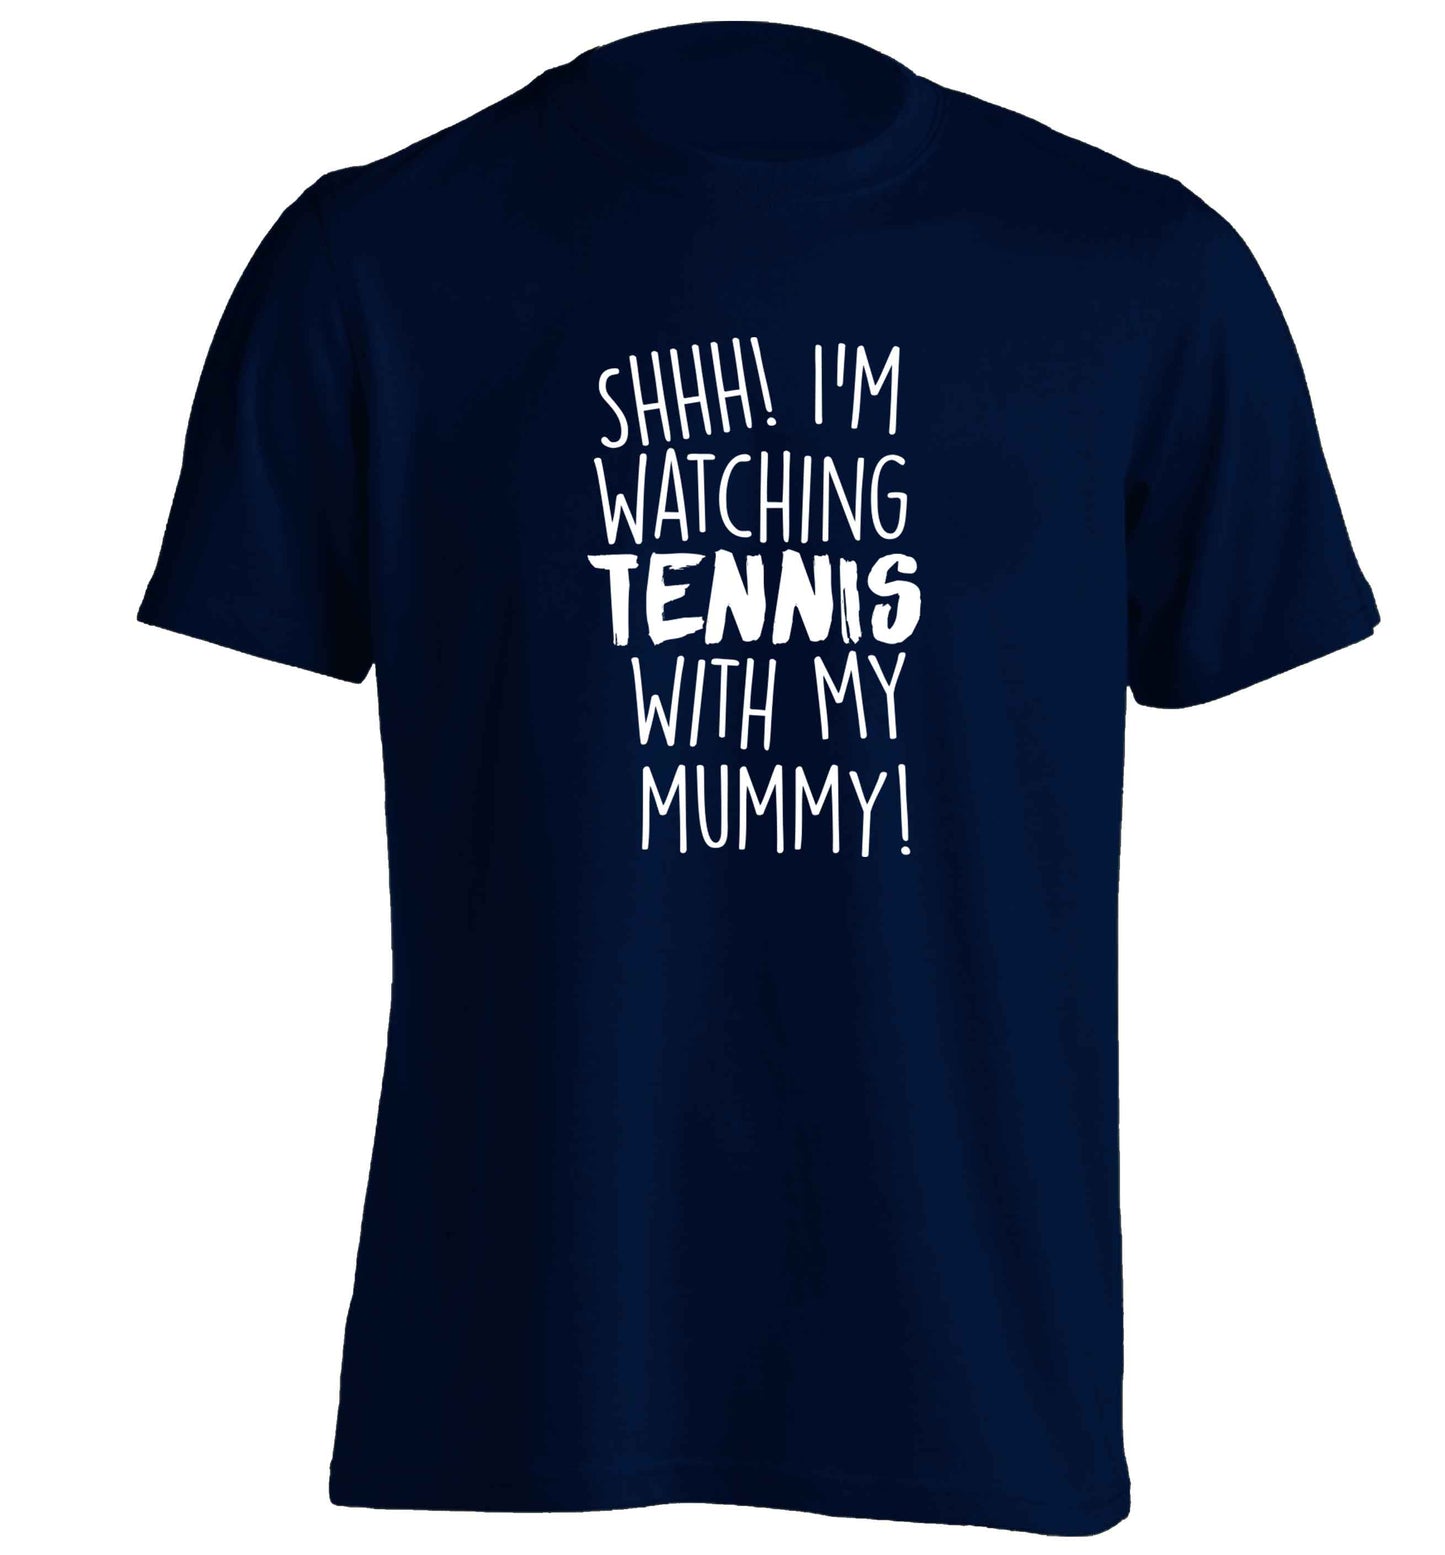 Shh! I'm watching tennis with my mummy! adults unisex navy Tshirt 2XL